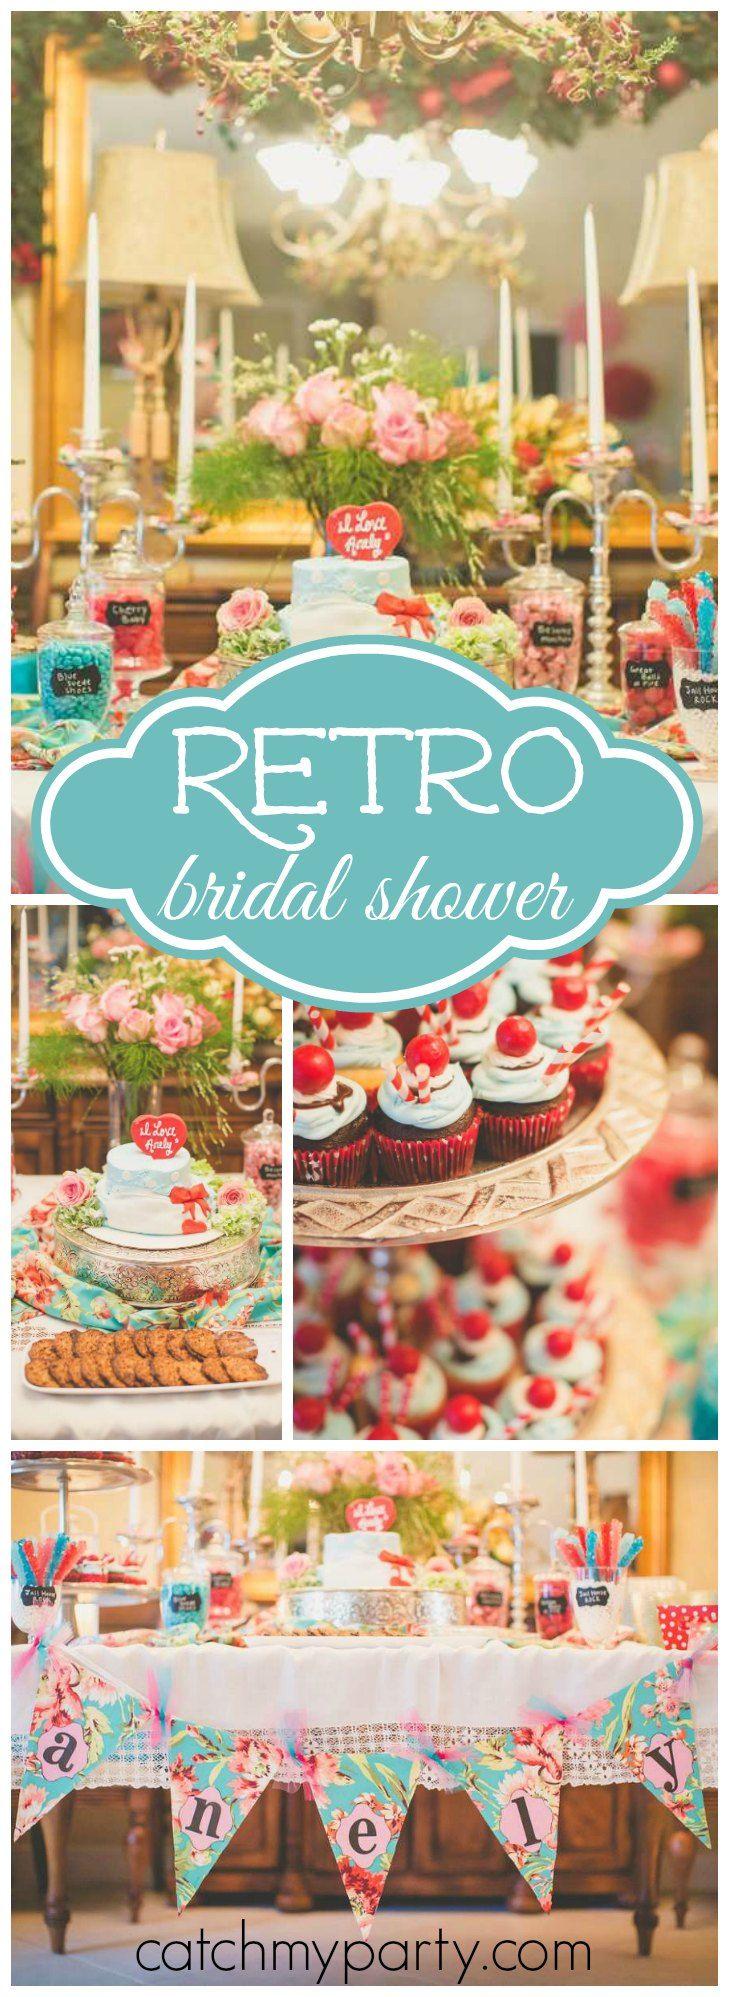 Wedding - Retro 50's Housewife / Bridal/Wedding Shower "Anely's Retro Housewife Bridal Shower"